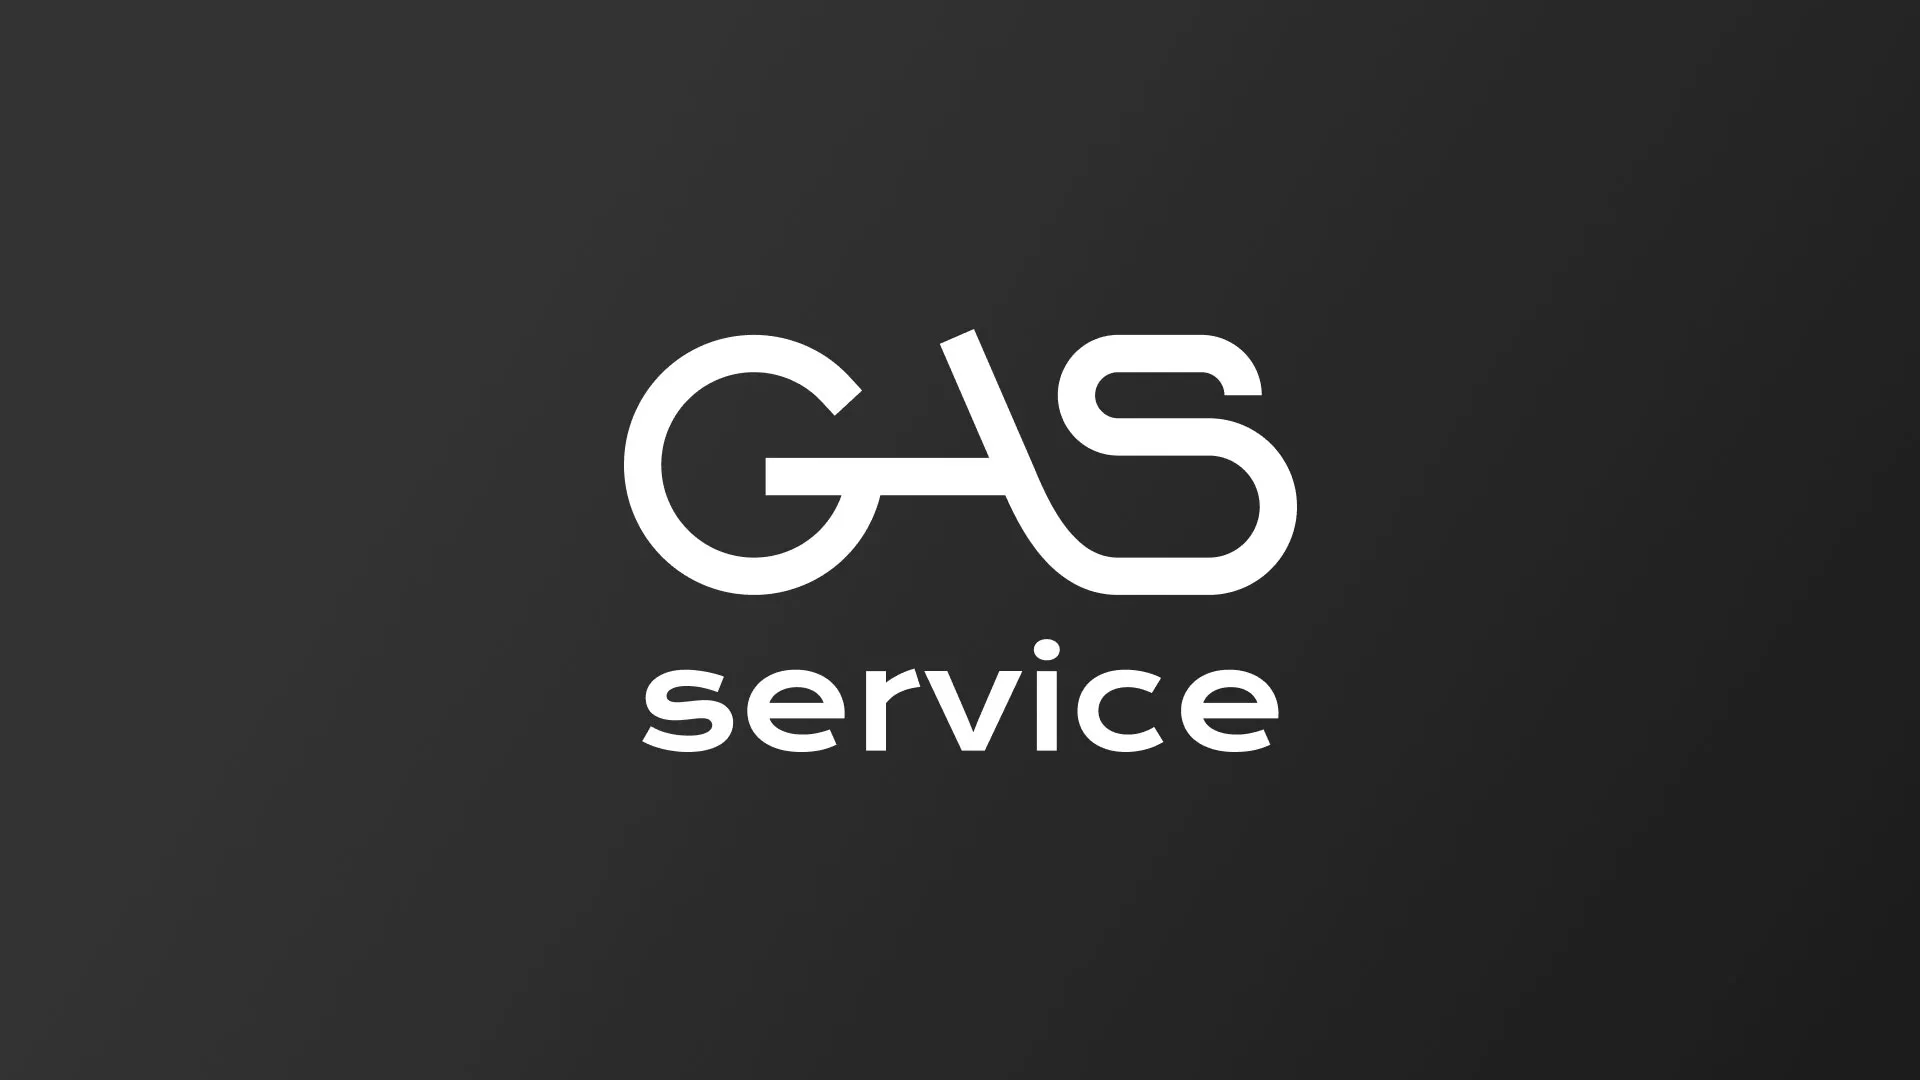 Разработка логотипа компании «Сервис газ» в Талдоме